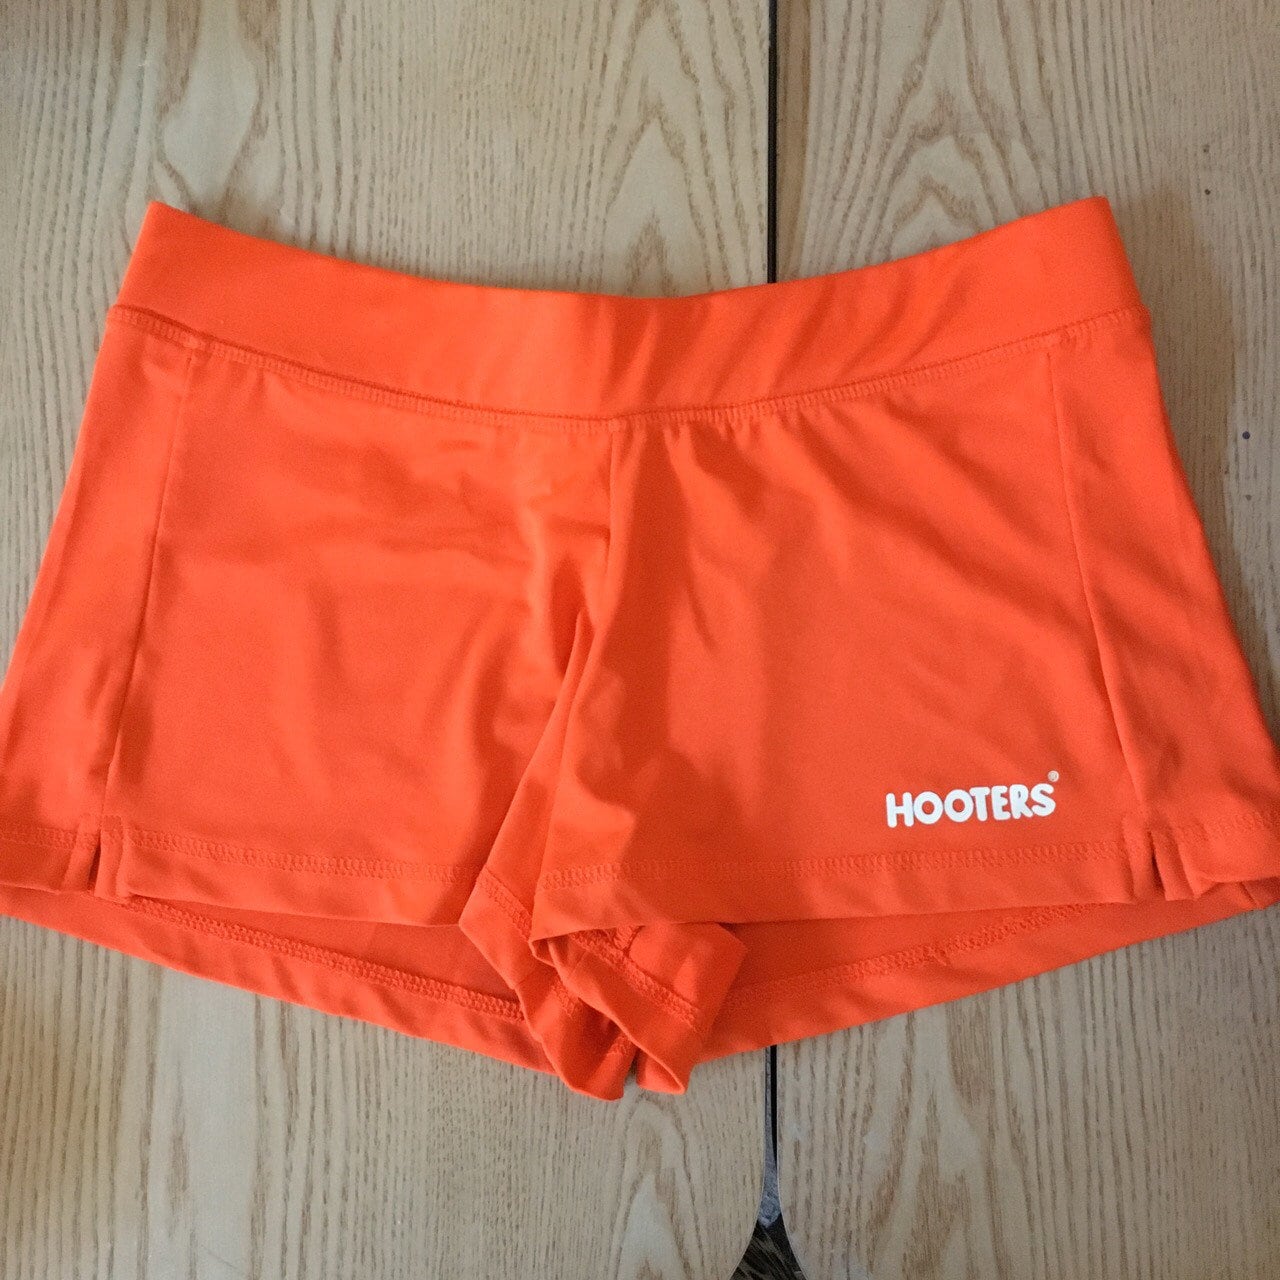 New Sexy Hooters Girl Uniform Shorts Stretchy Size Medium 